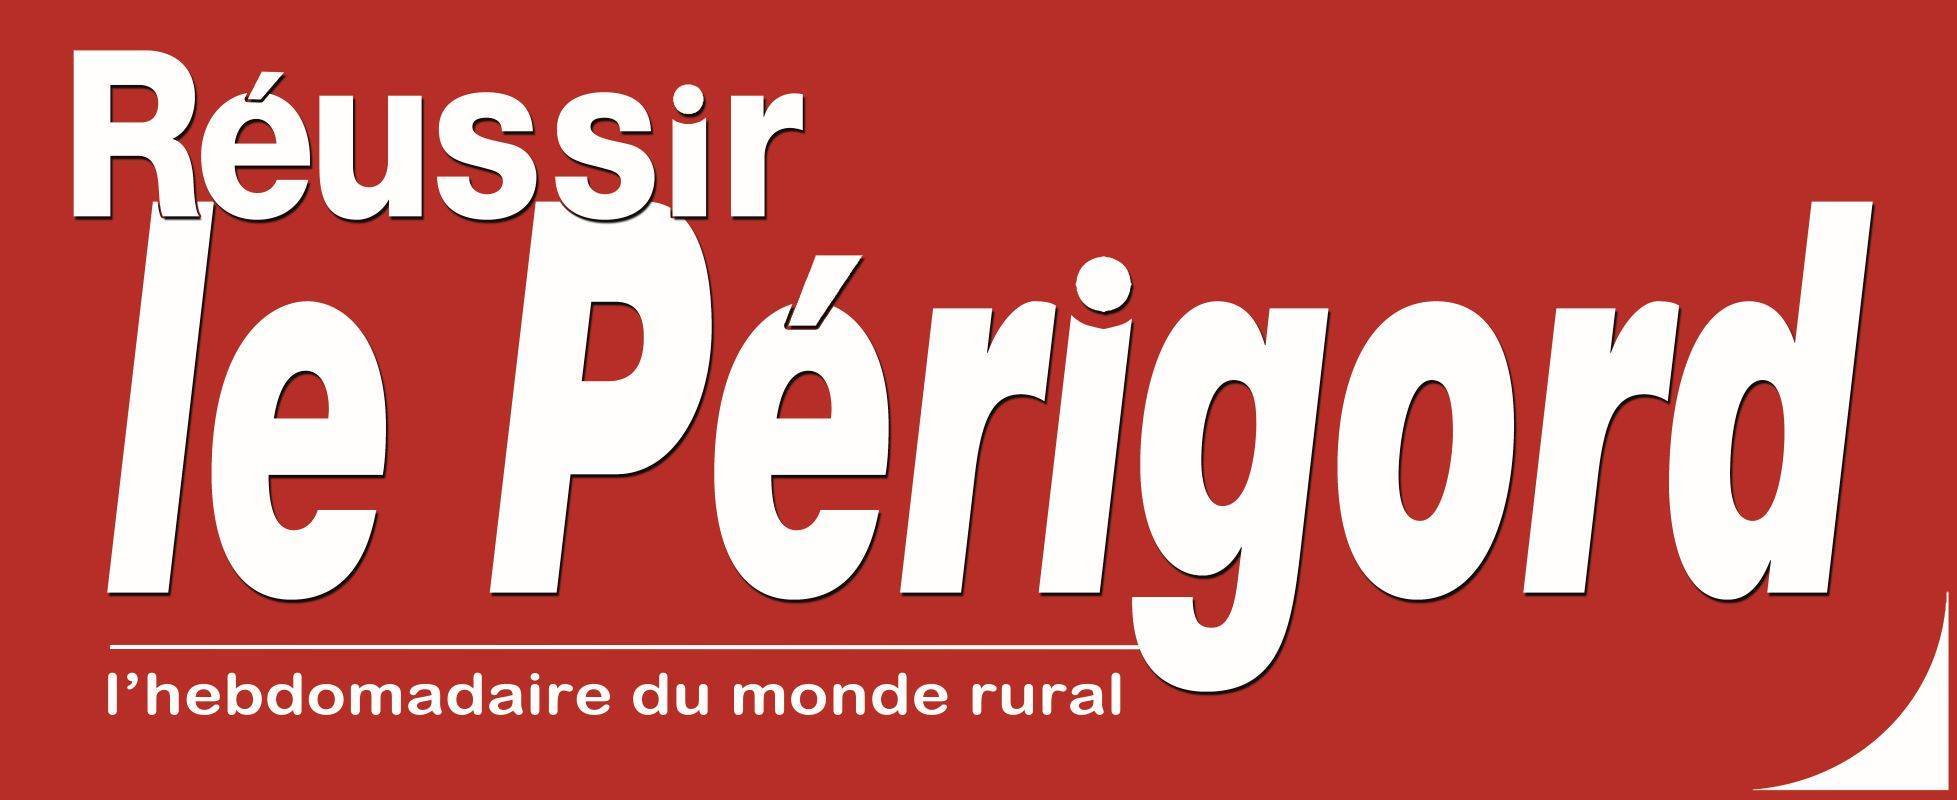 www.reussirleperigord.fr